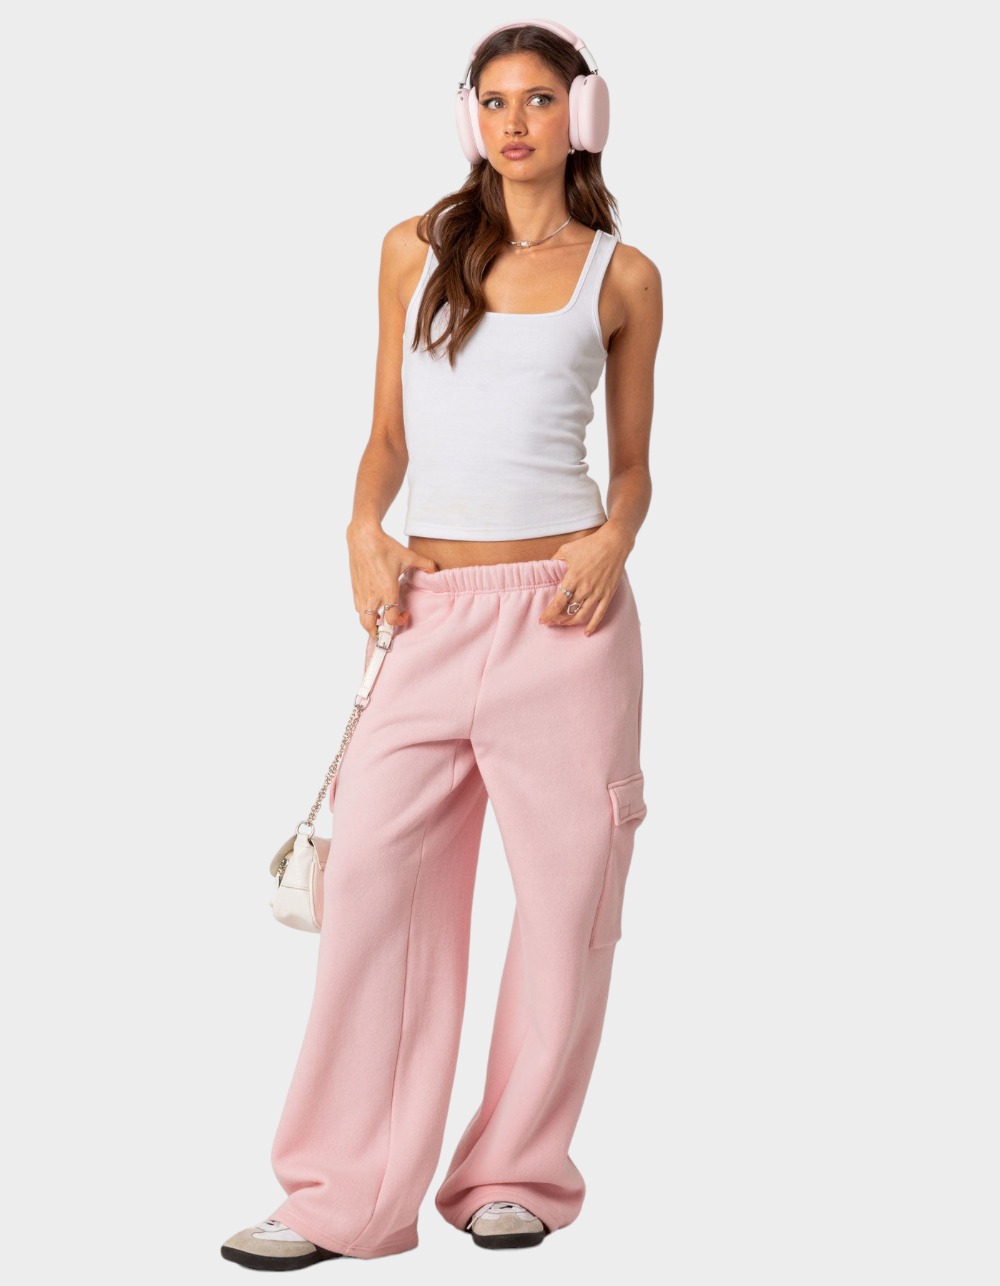 Women's Pink Sweatpants, Cargo, Denim & High-Waisted